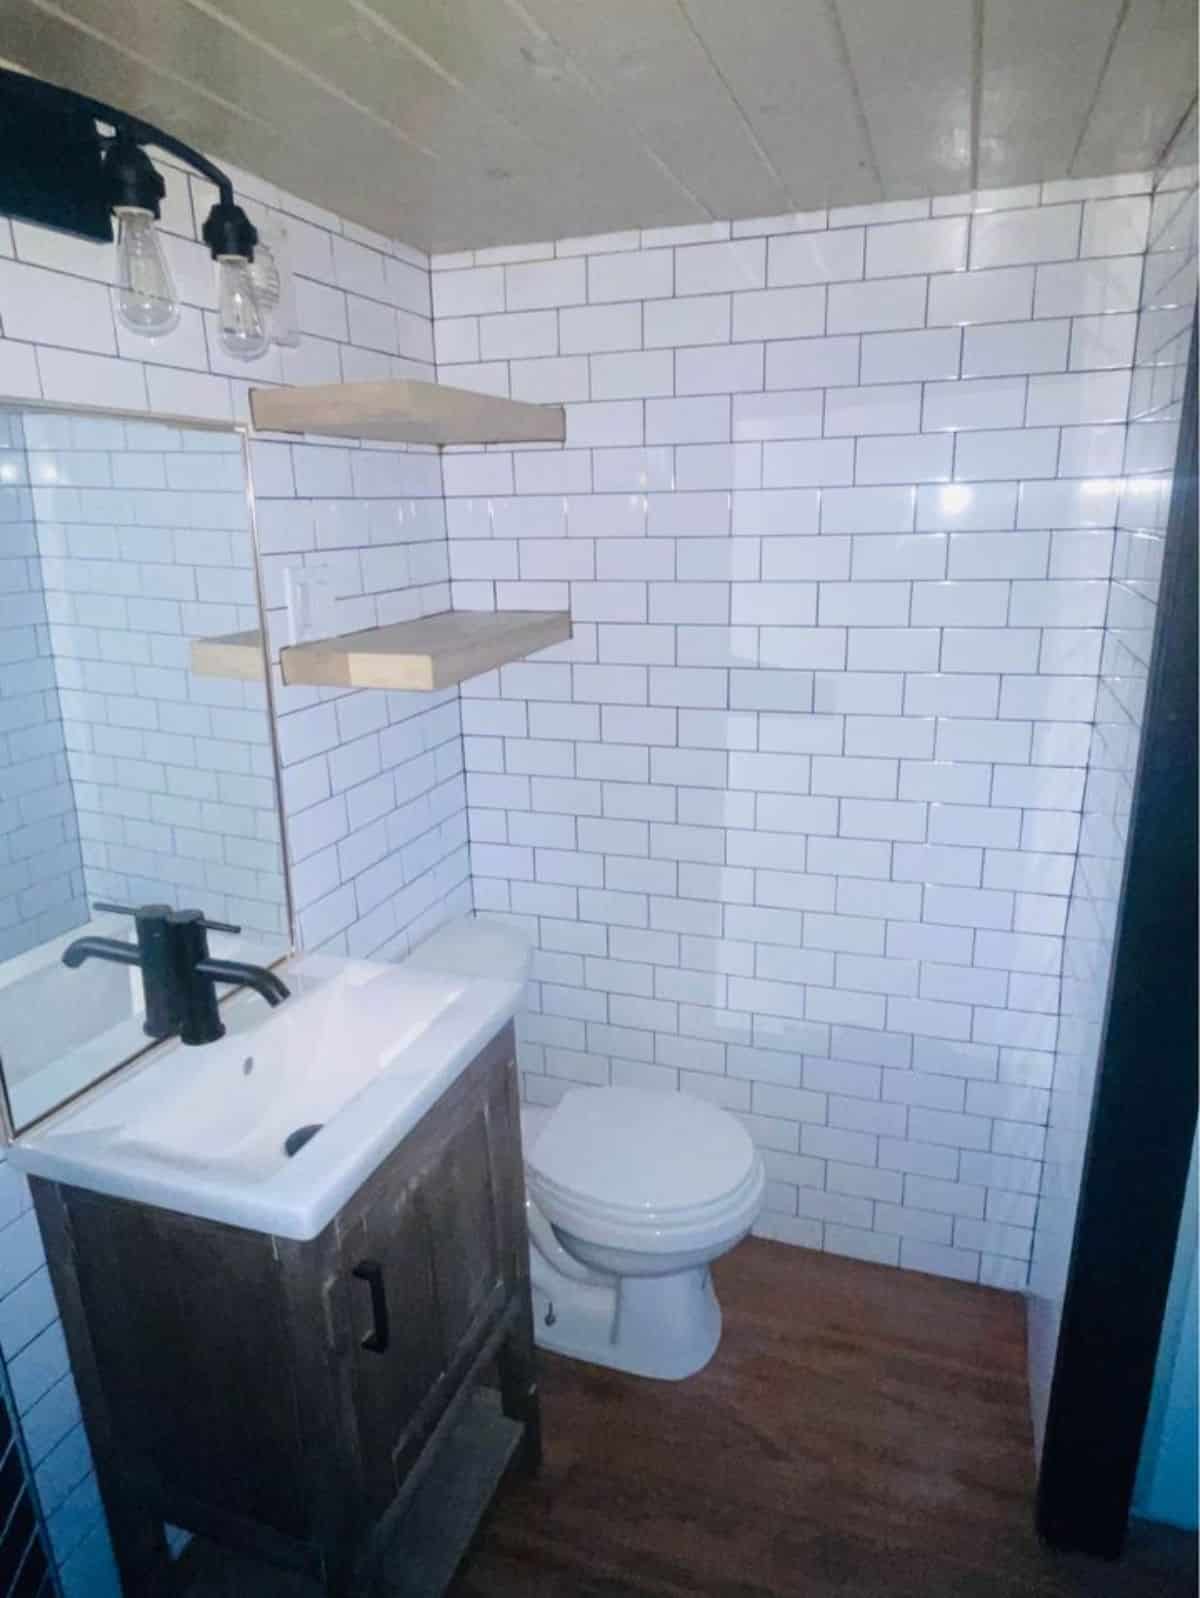 bathroom of brand-new tiny home